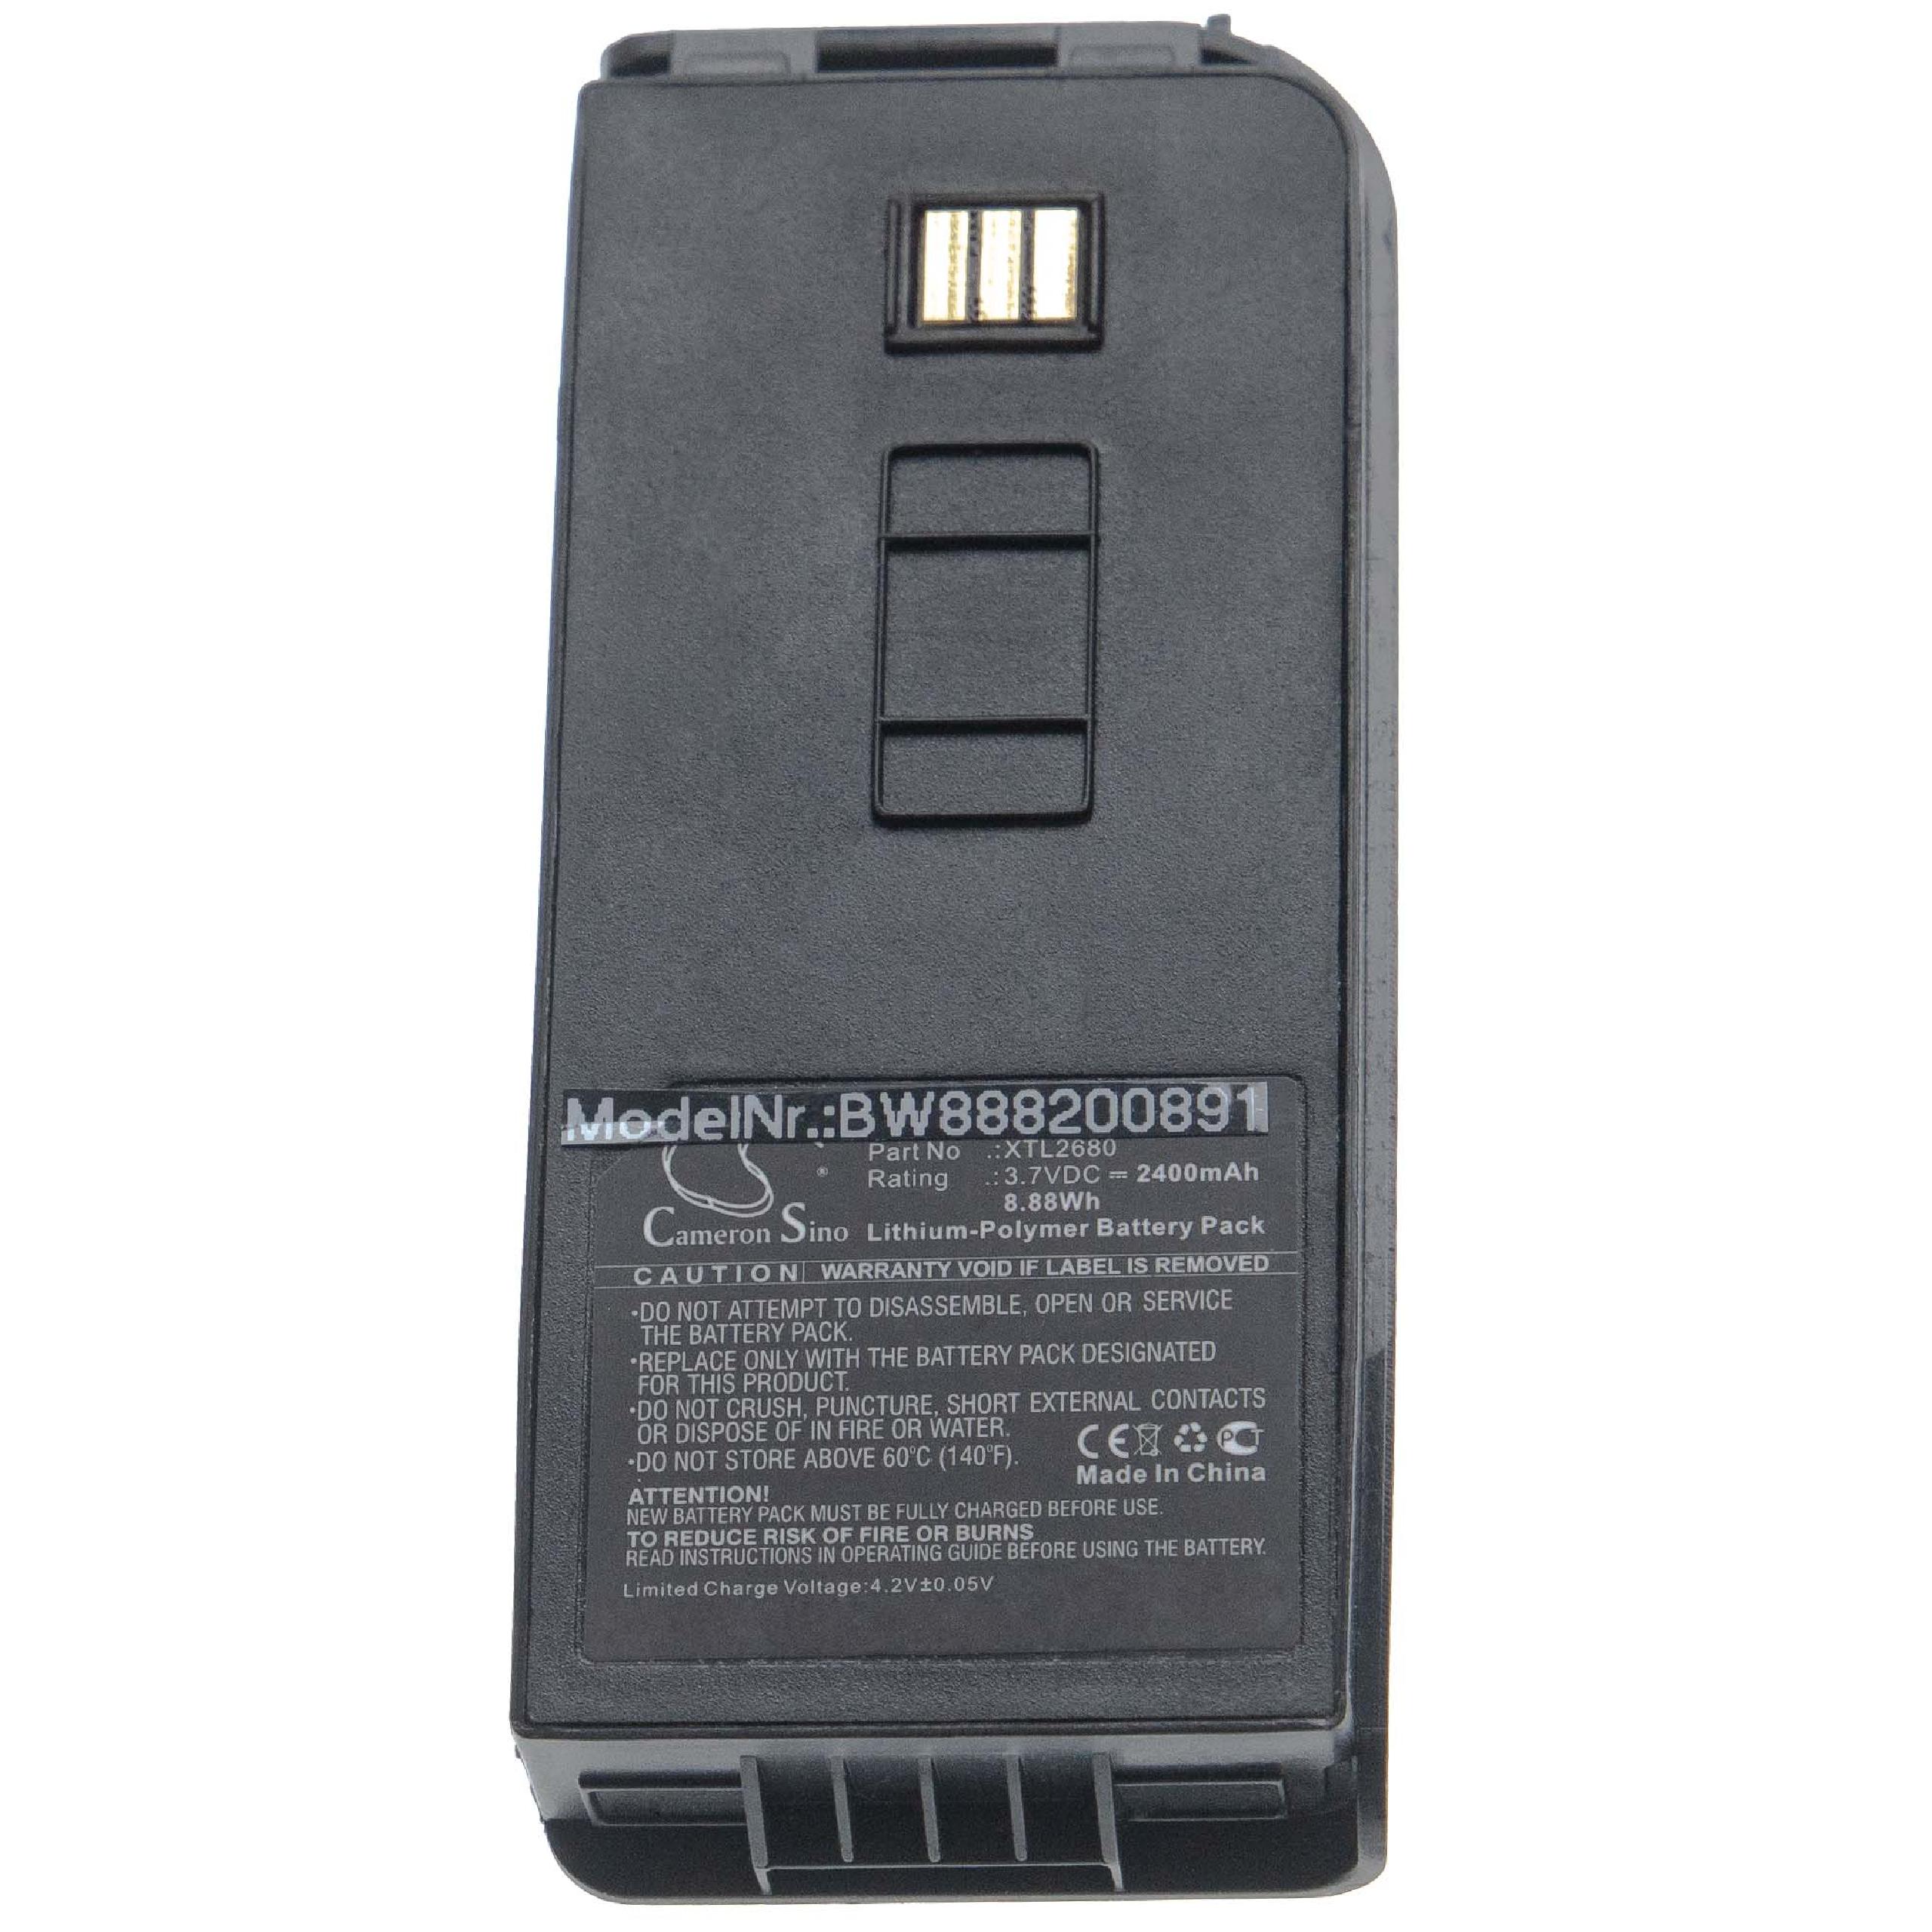 Batterie remplace Thuraya XTL2680 pour téléphone portable satellite - 2400mAh, 3,7V, Li-polymère